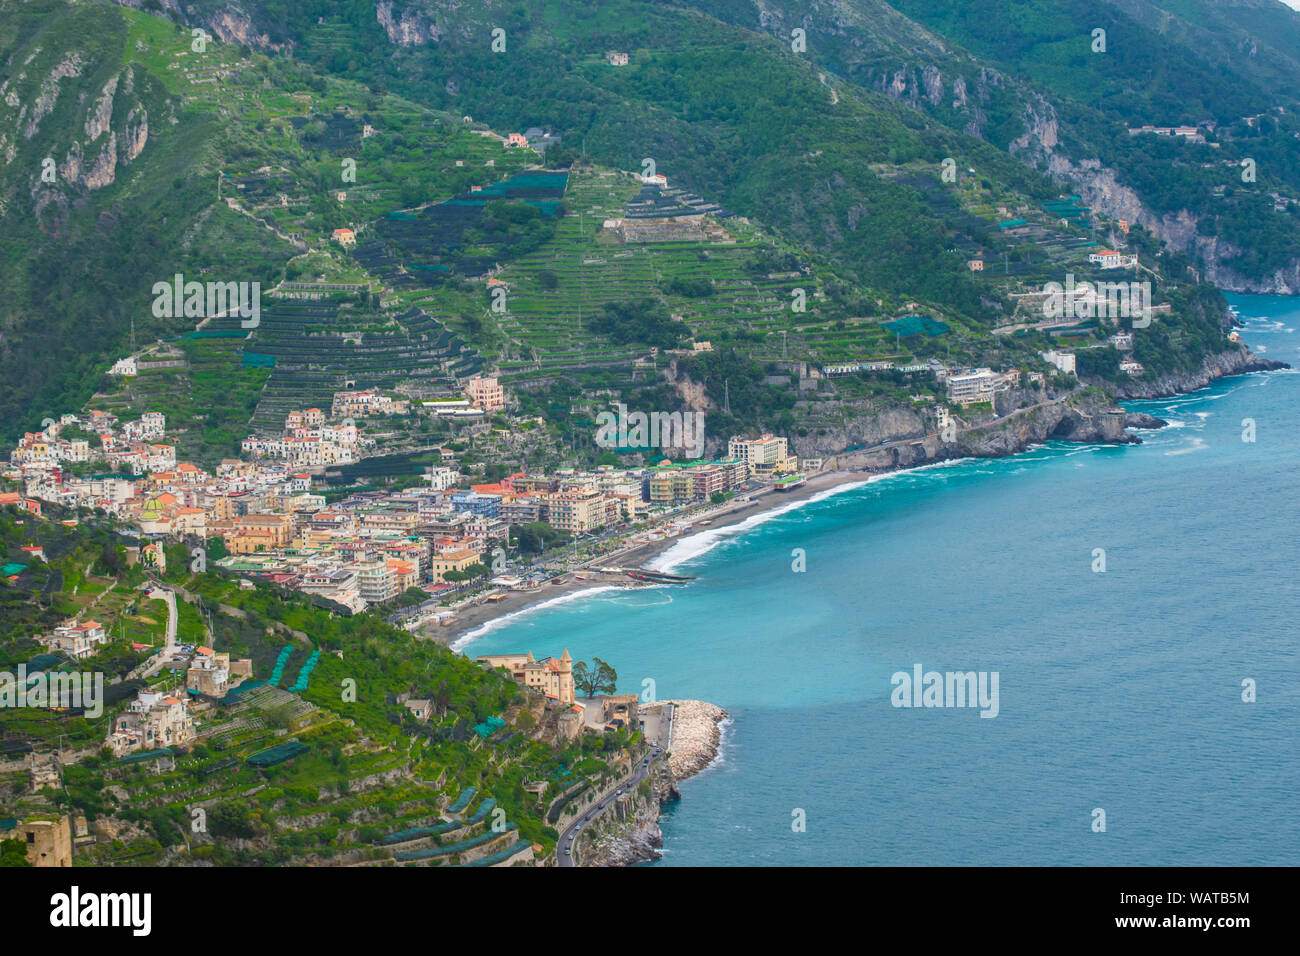 Sea, Beach, and Mountains view from the Garden of Villa Rufolo, historic center of Ravello, Amalfi Coast of Italy Stock Photo